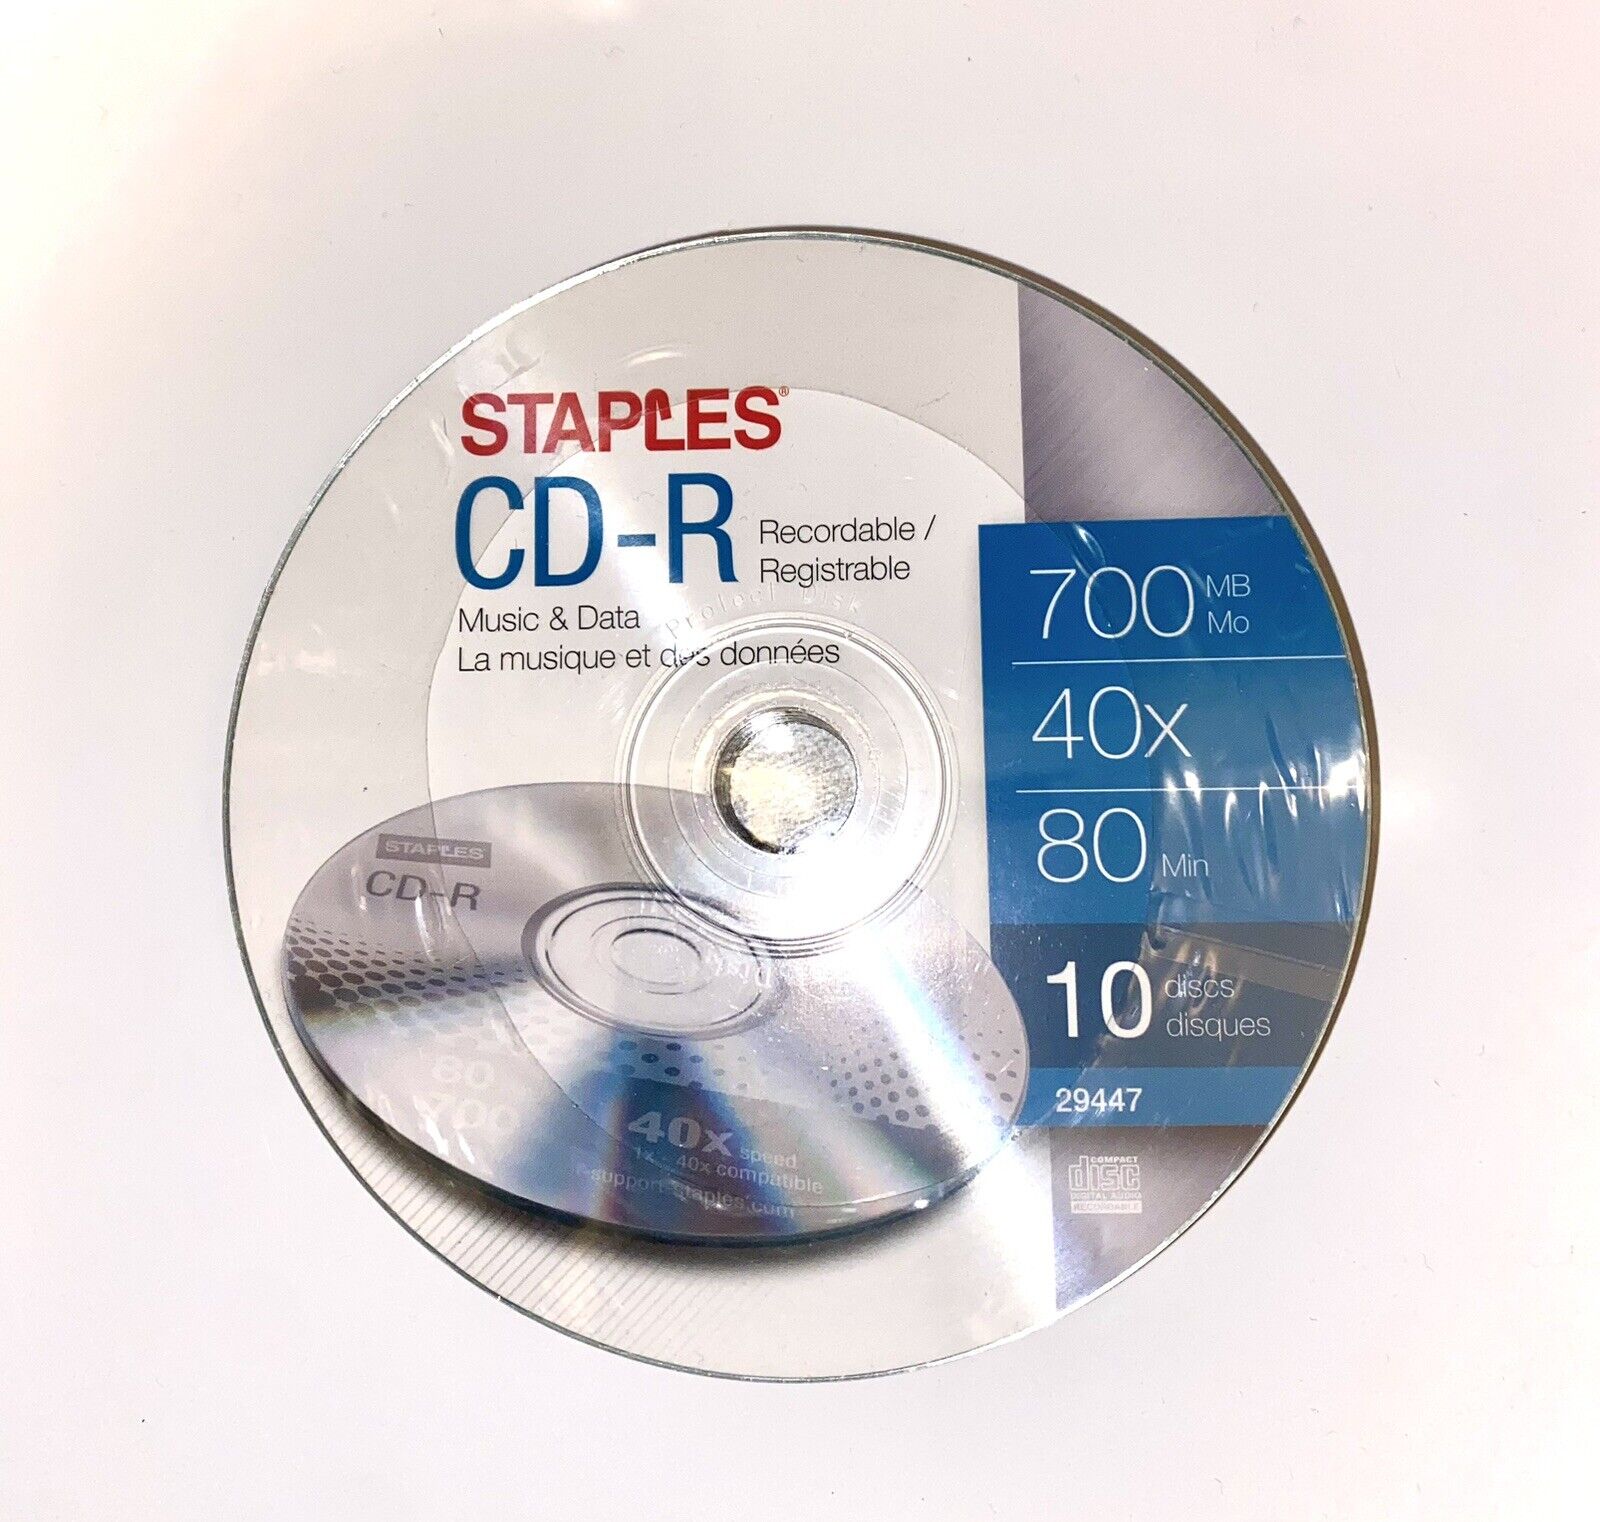 Staples CD-R 700MB 40X 80 Min-10 discs New Sealed